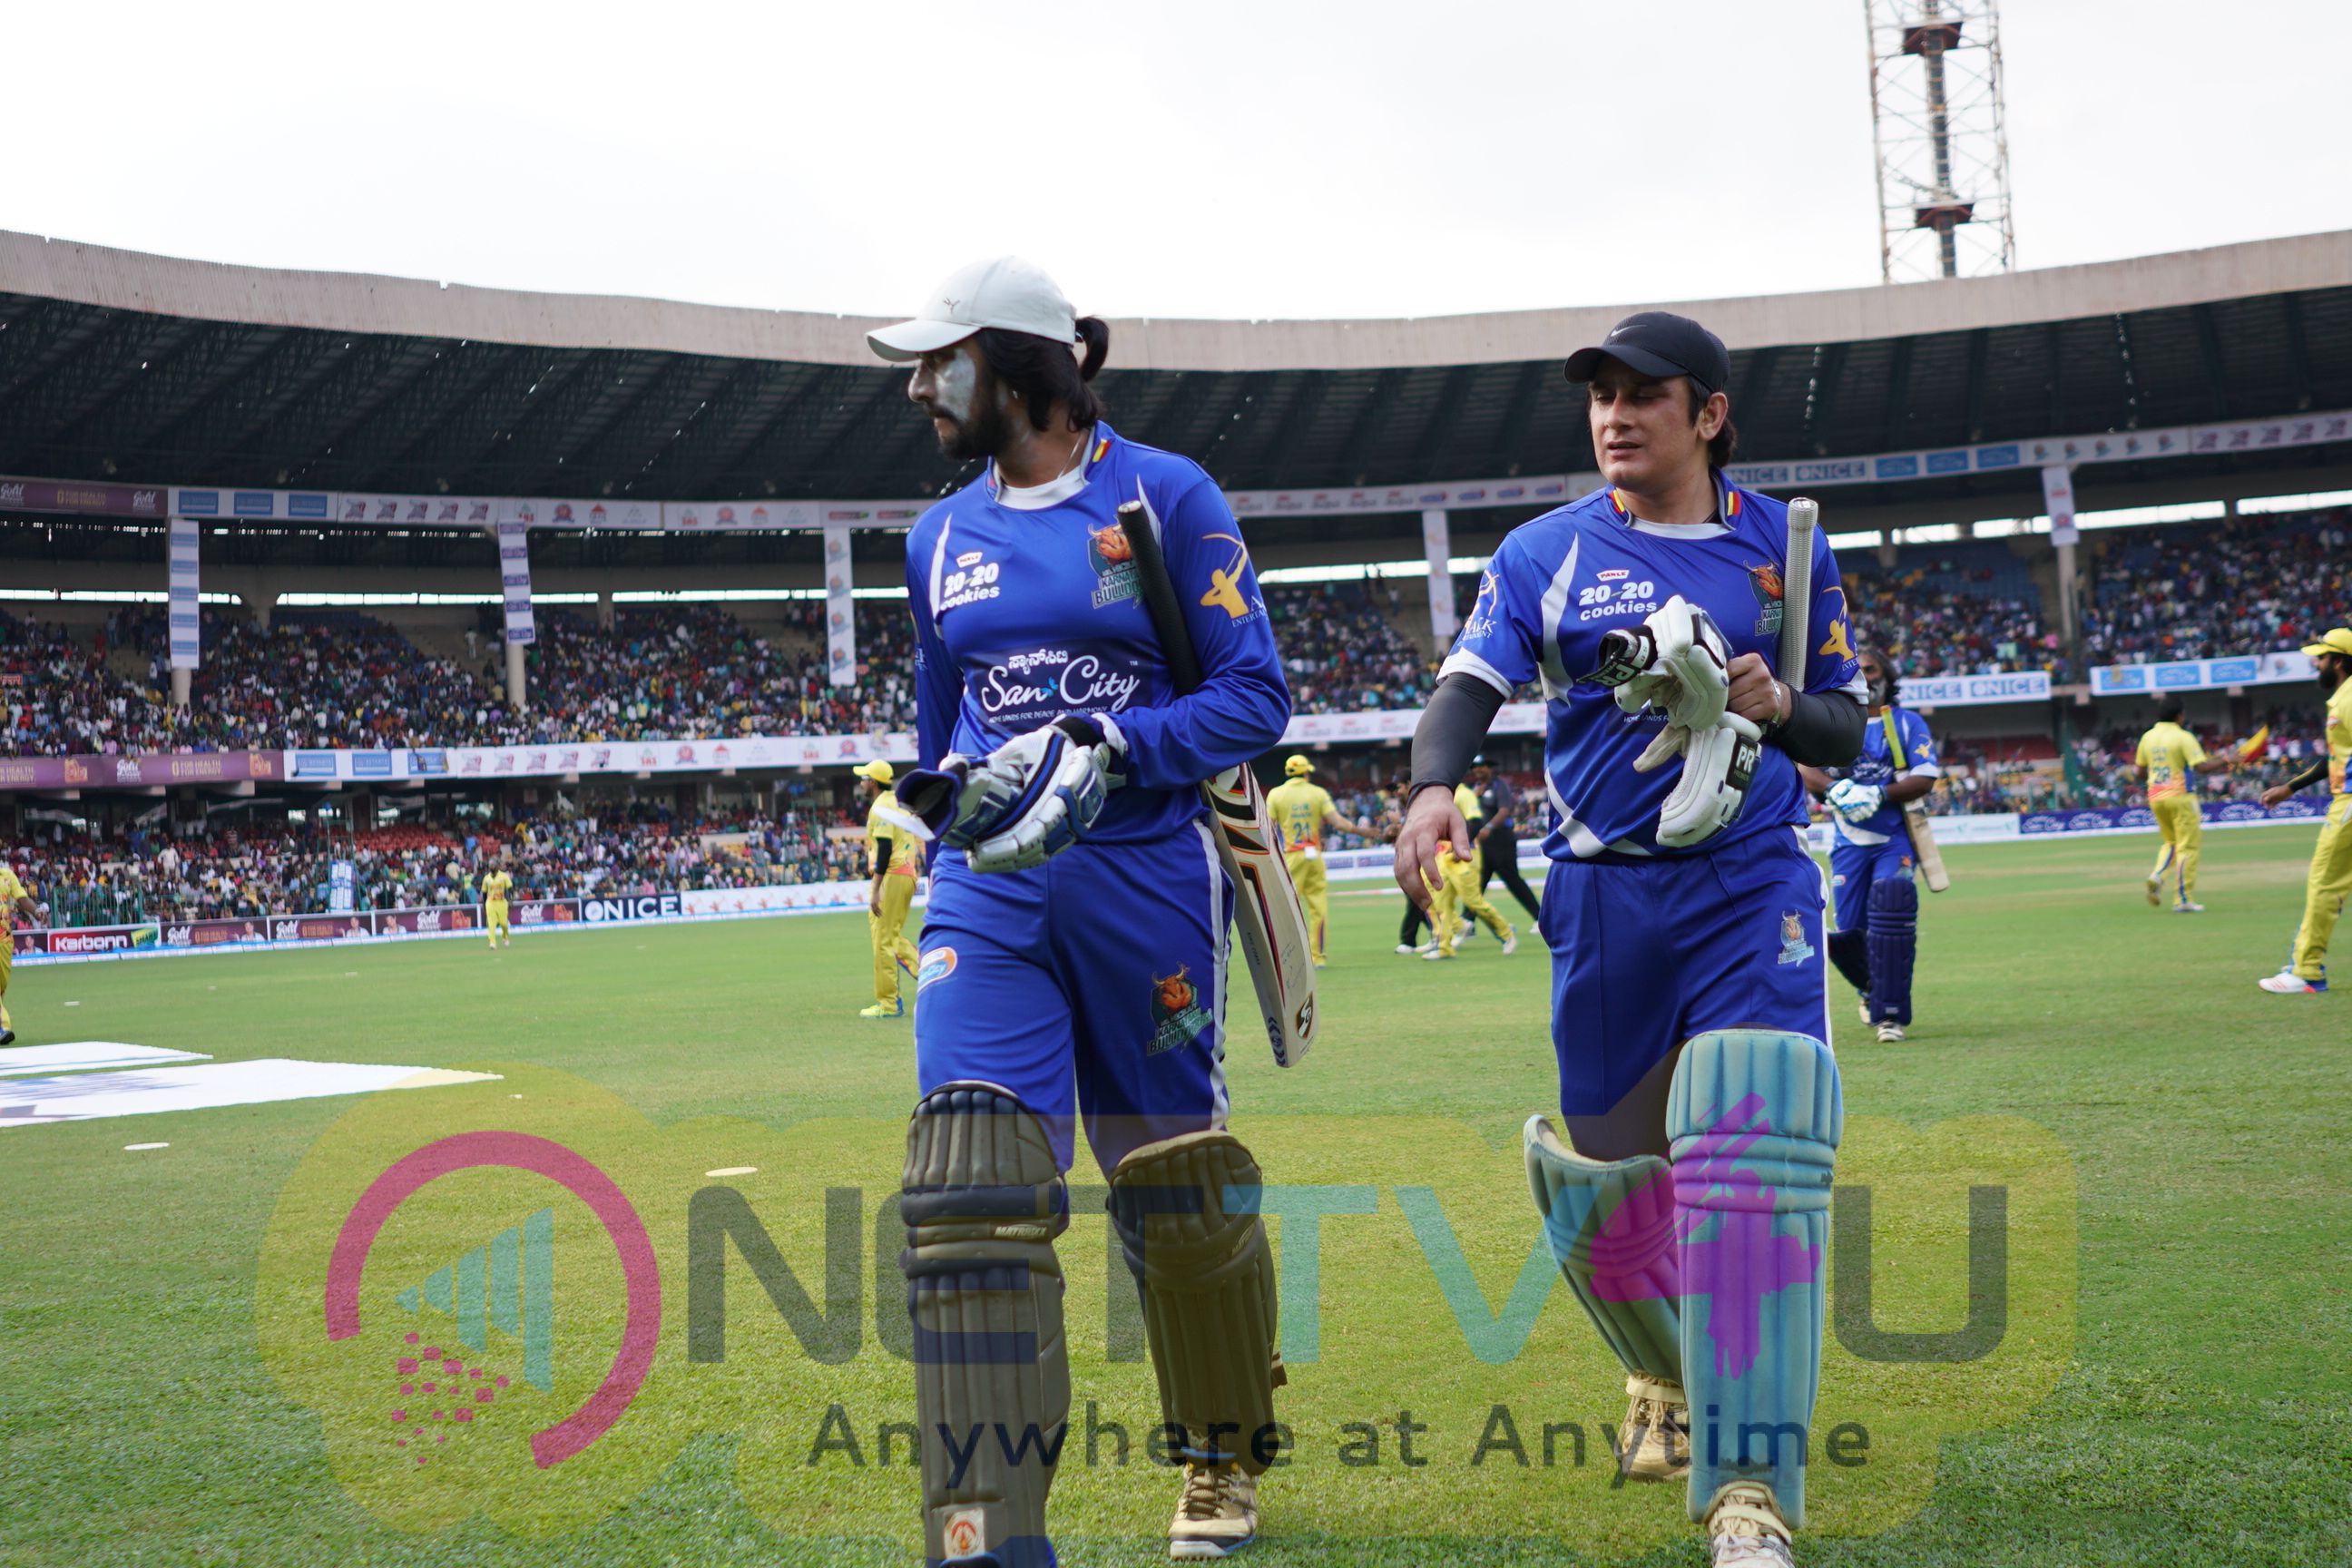  chennai rhinos vs karnataka bulldozers ccl 6 cricket match images 6